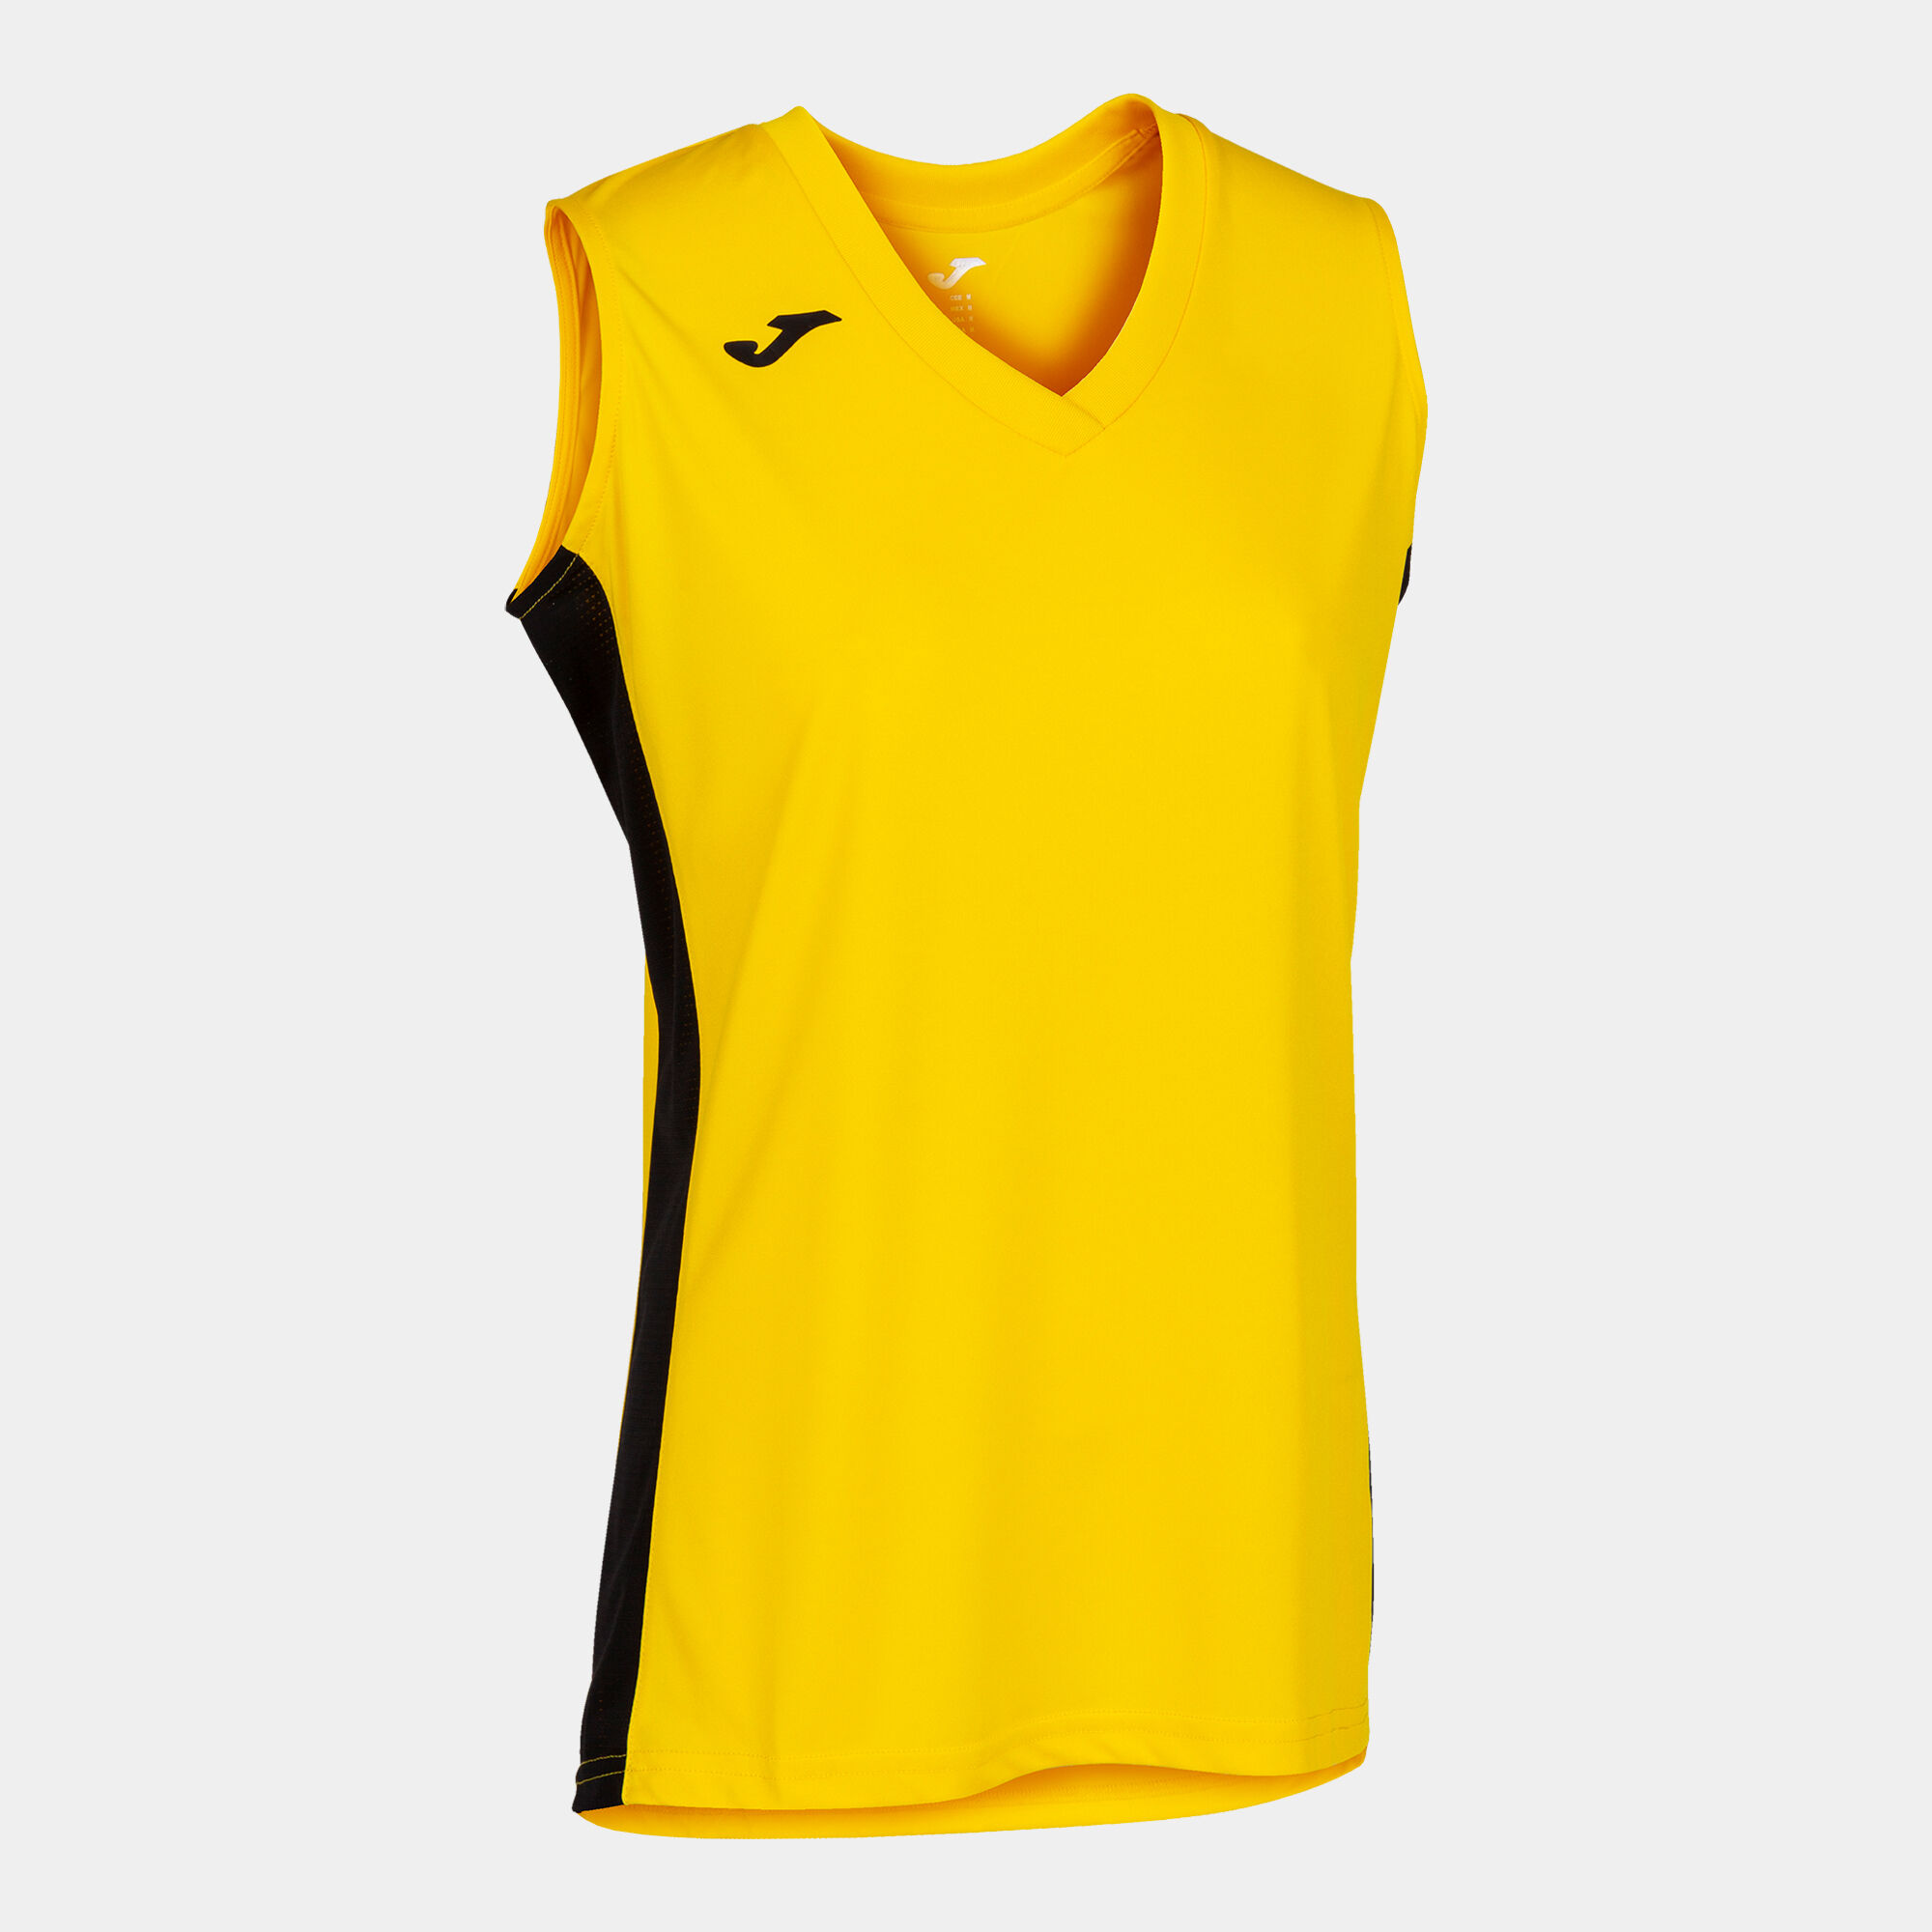 T-shirt de alça mulher Cancha III amarelo preto